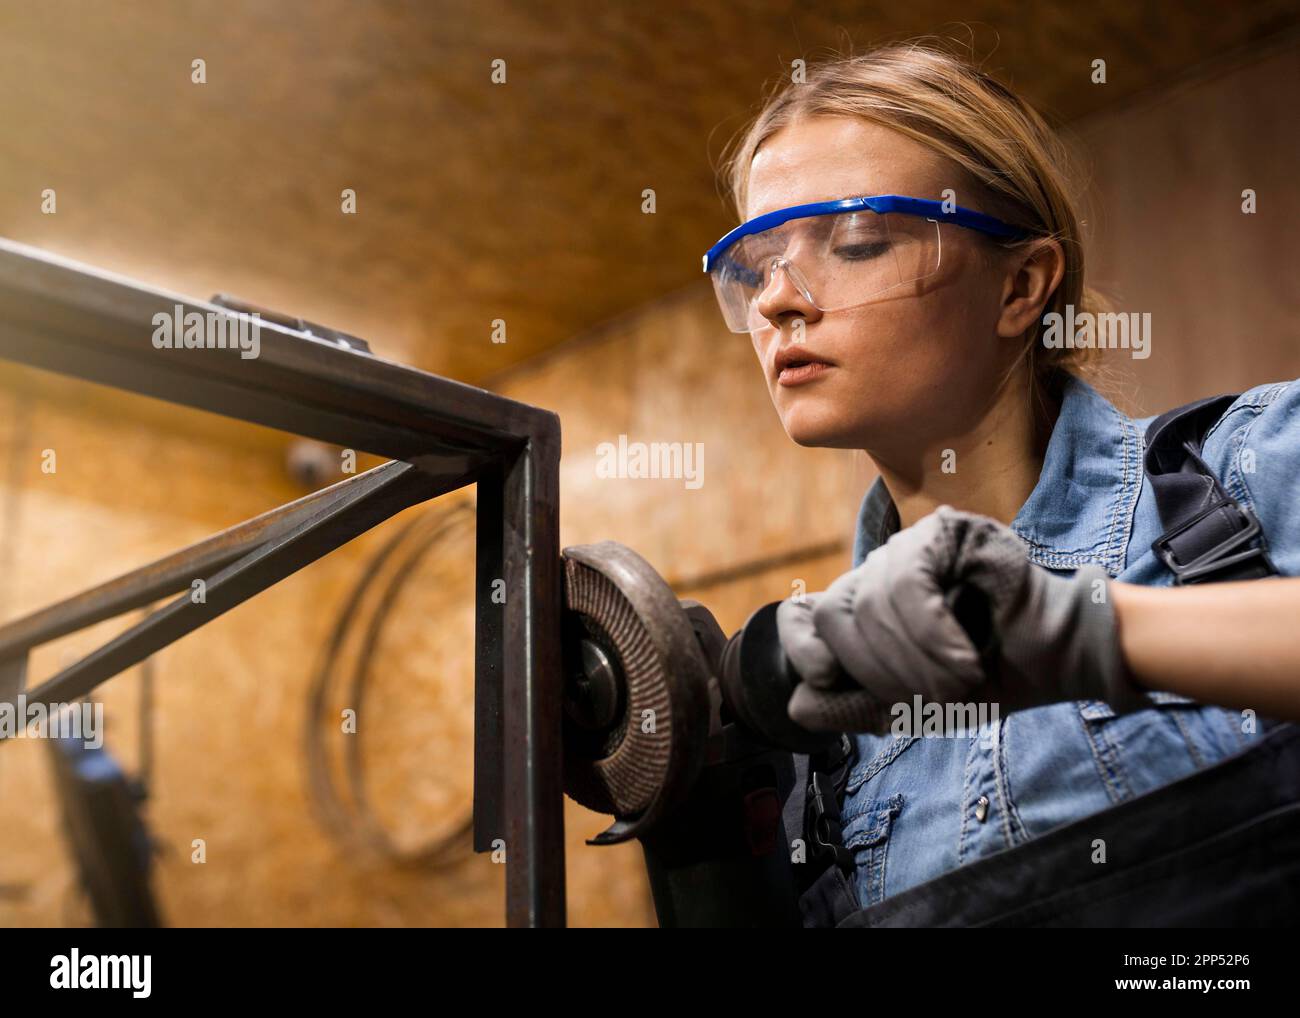 Female welder using angle grinder Stock Photo